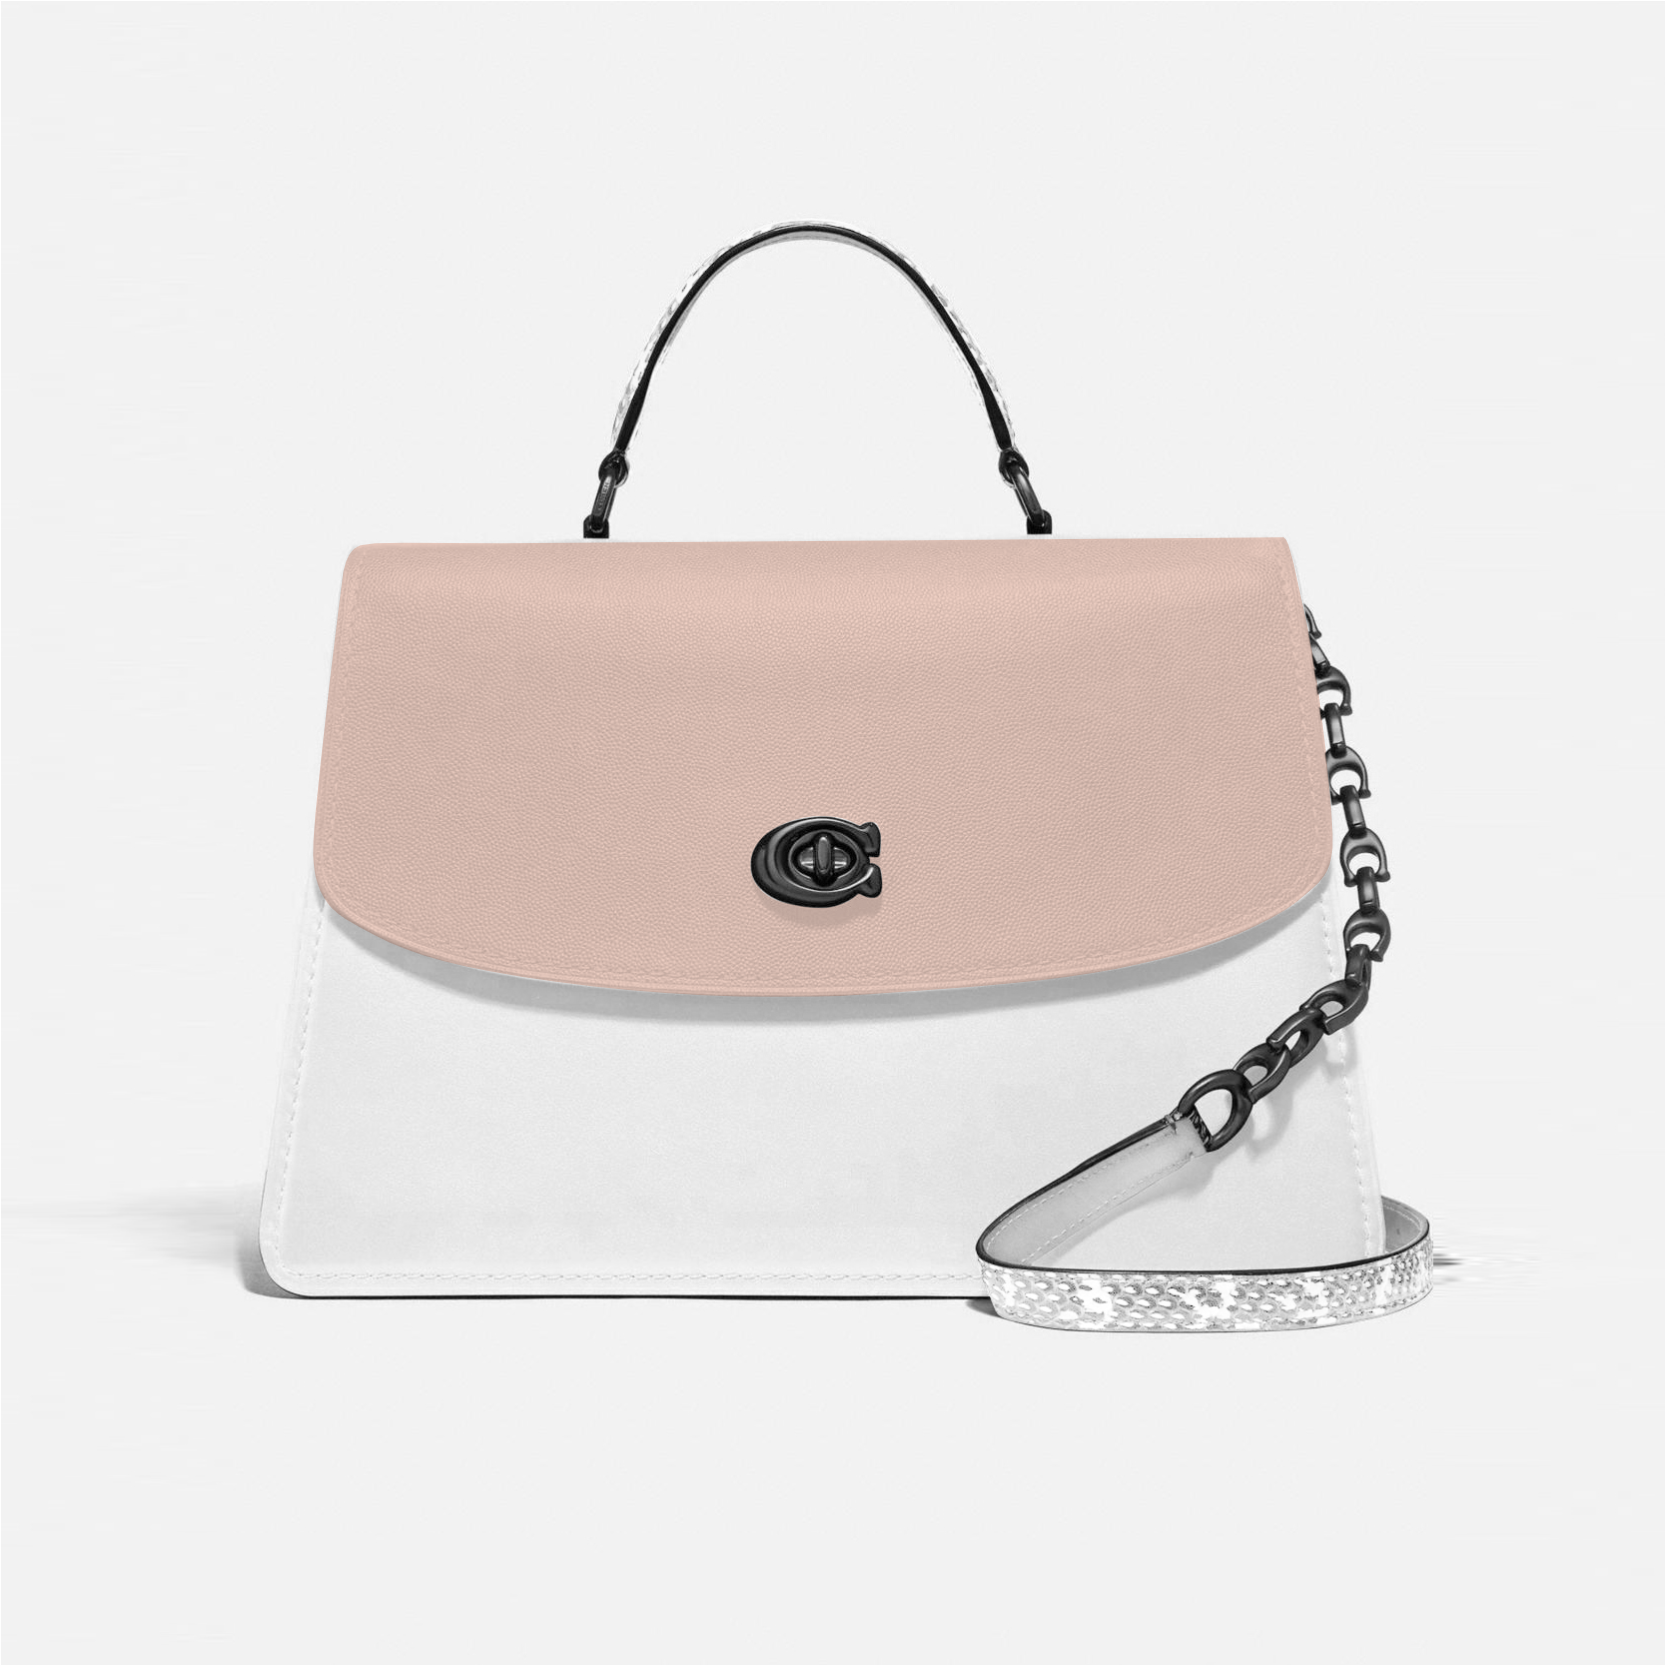 2020 new fashion designer grain leather handbags